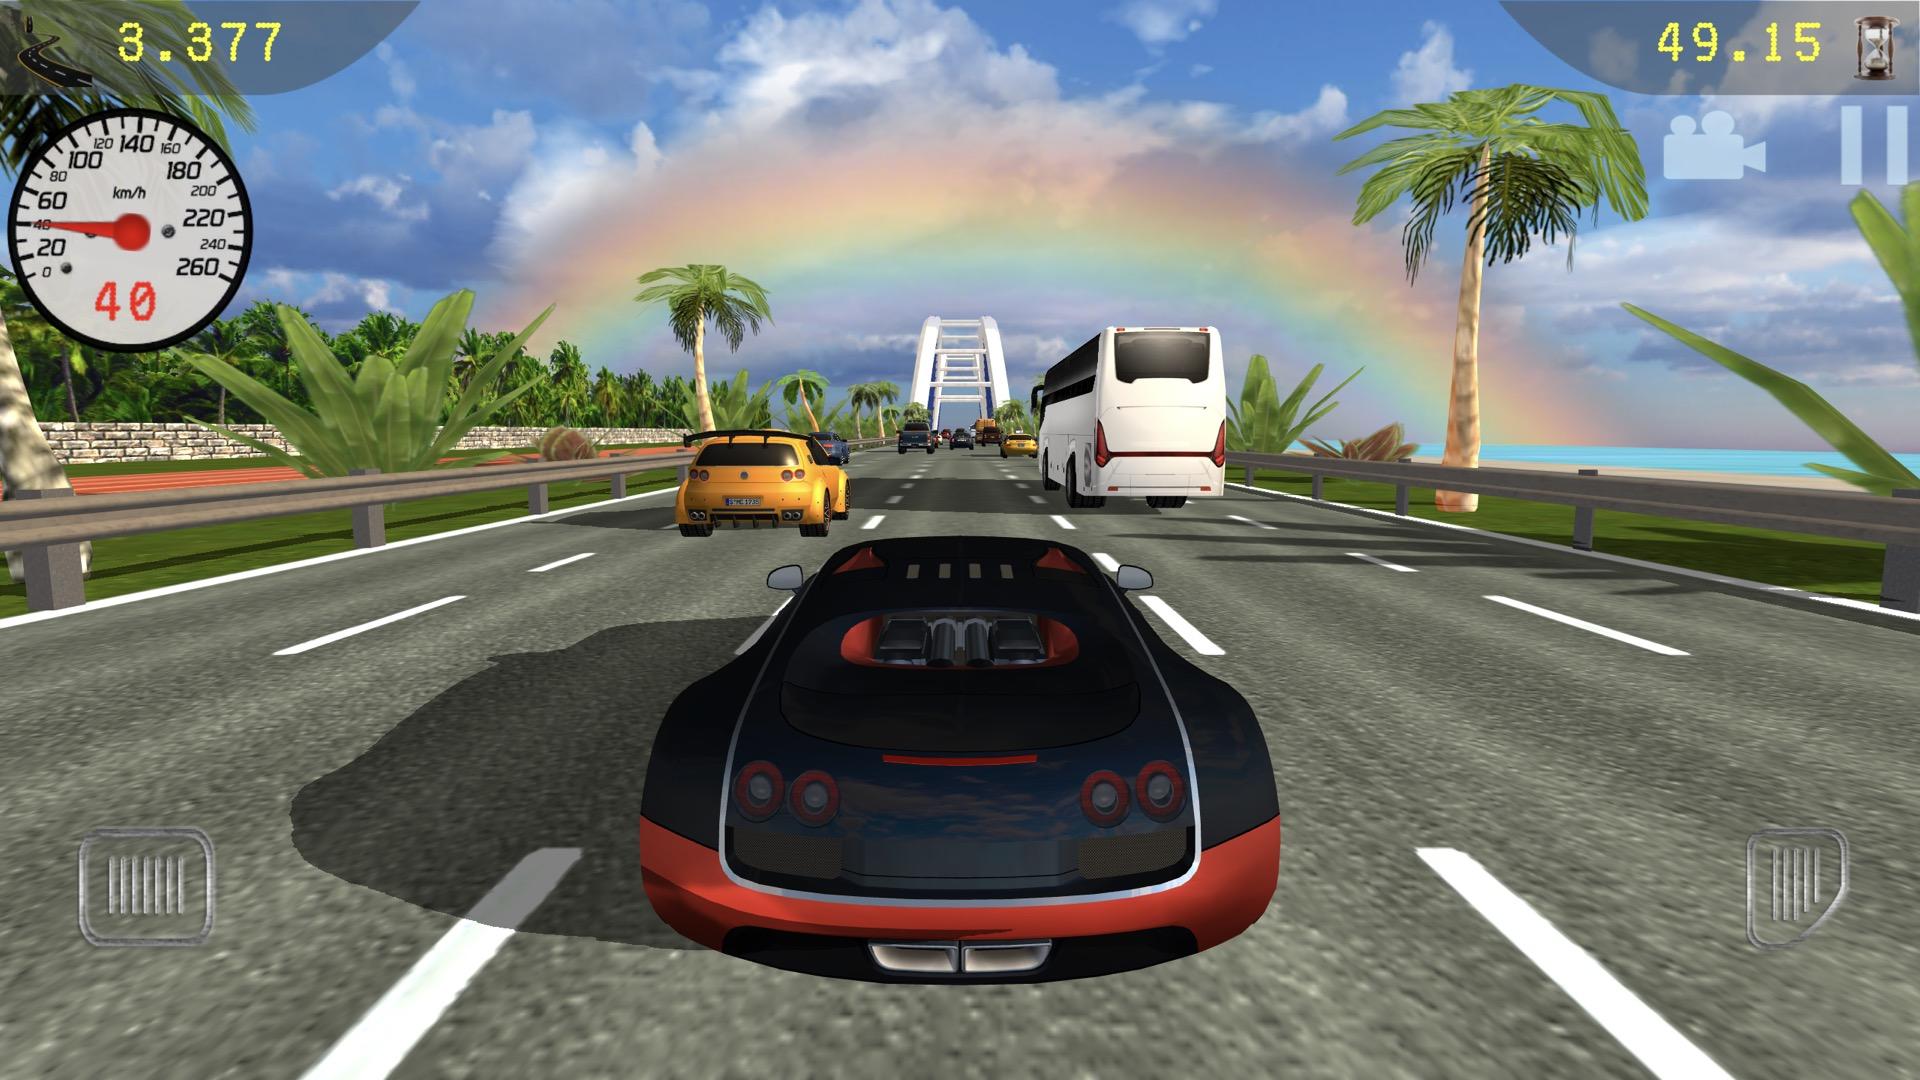 Screenshot 1 of 자동차 경주 게임 : 고급 자동차 13.0